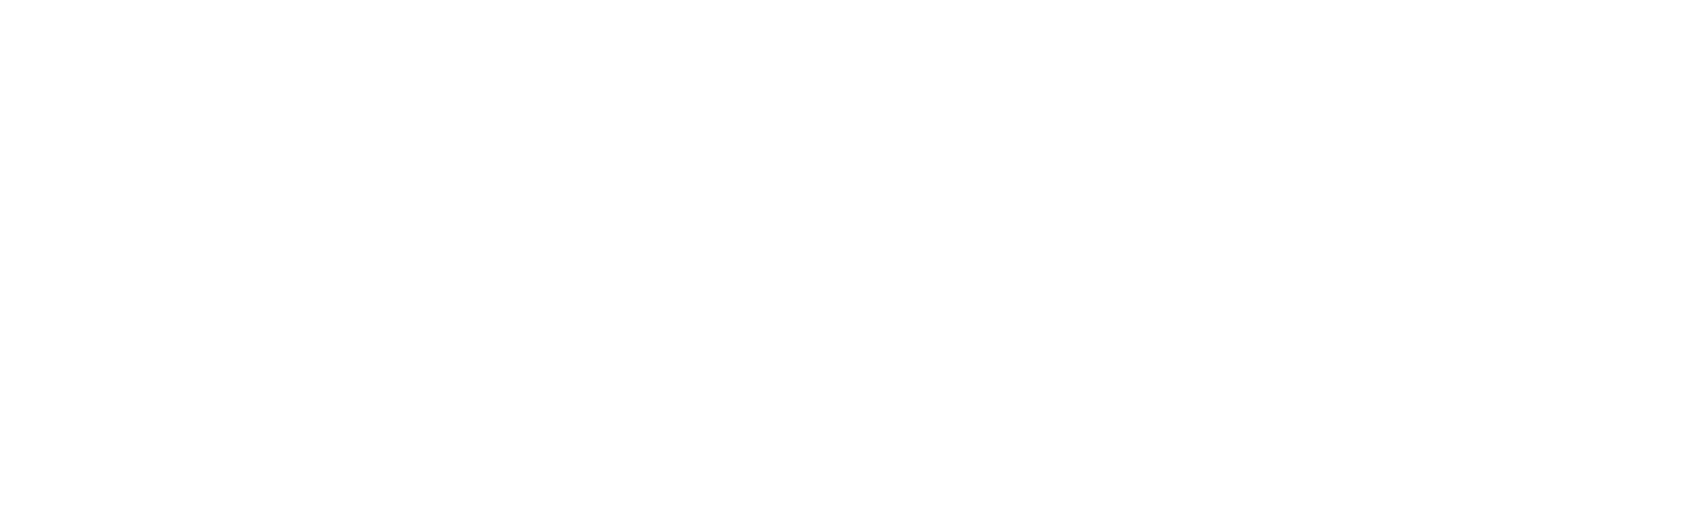 Dyson Logo - Air Blade Spares & Sales - Hillside Hand Dryers